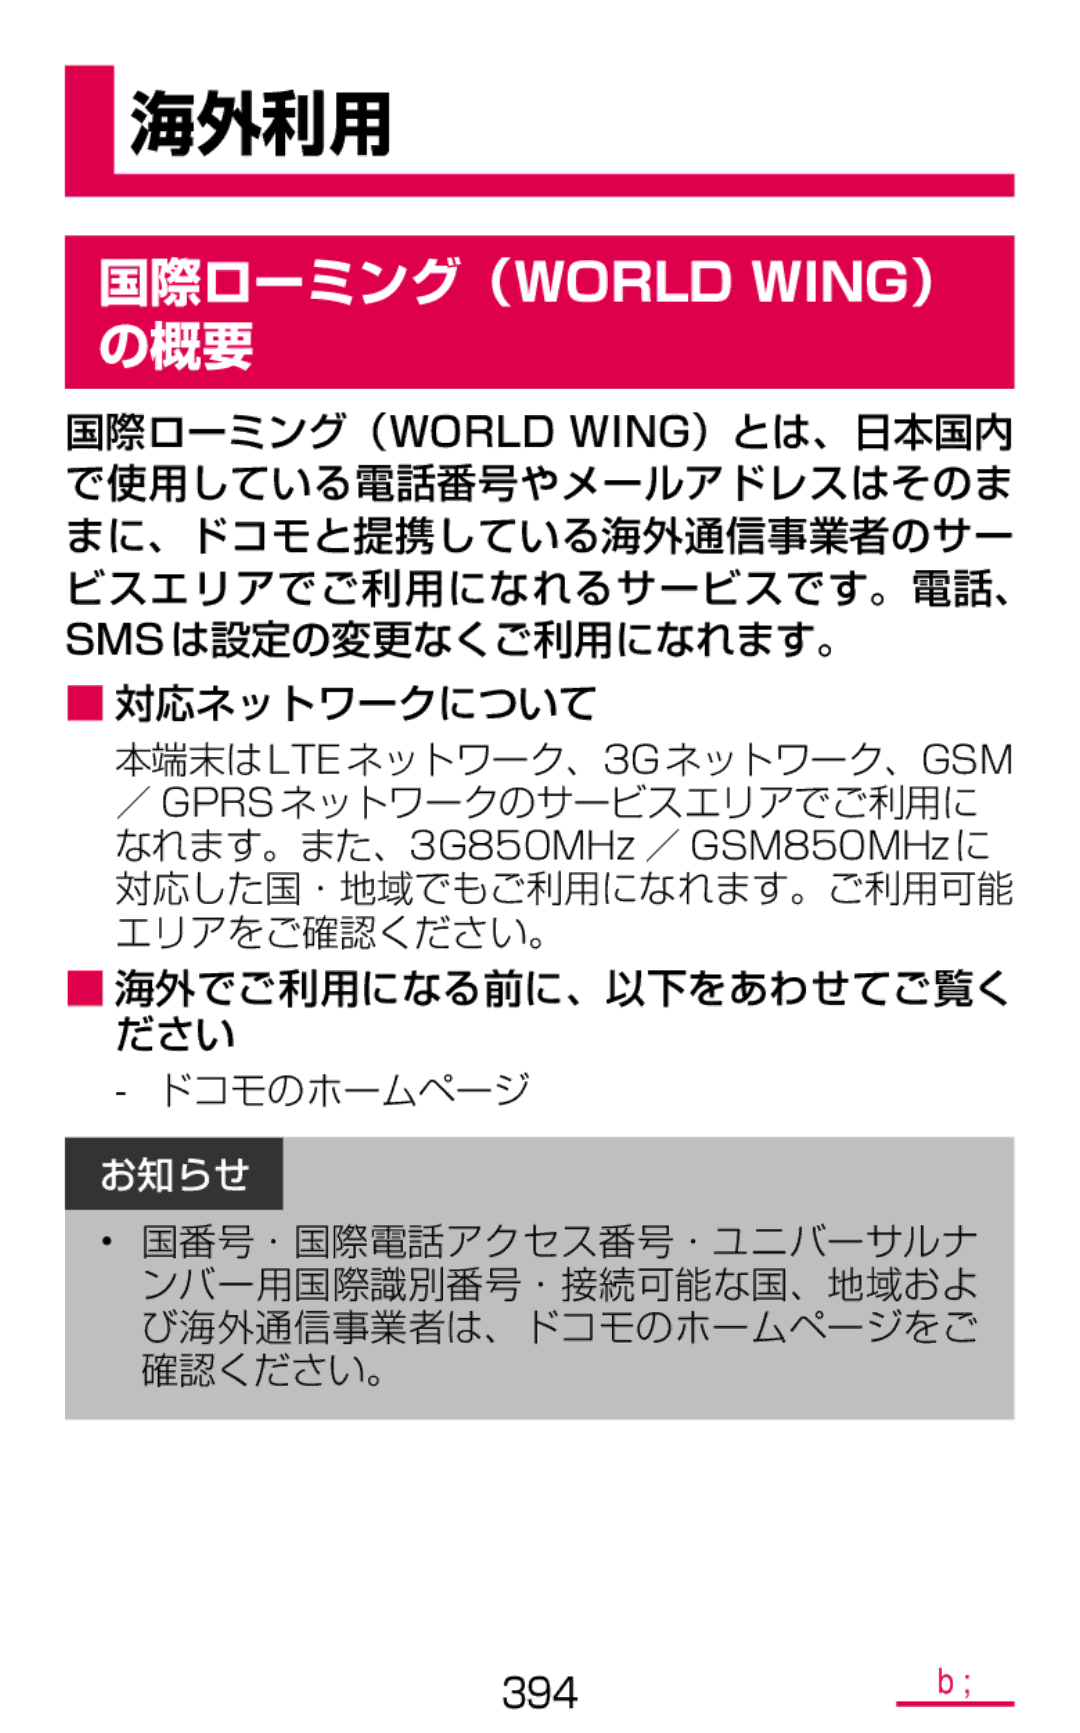 Samsung SM-G900DZWEDCM, SM-G900DSIEDCM, SM-G900DZKEDCM manual 海外利用, 国際ローミング（World Wing） の概要 